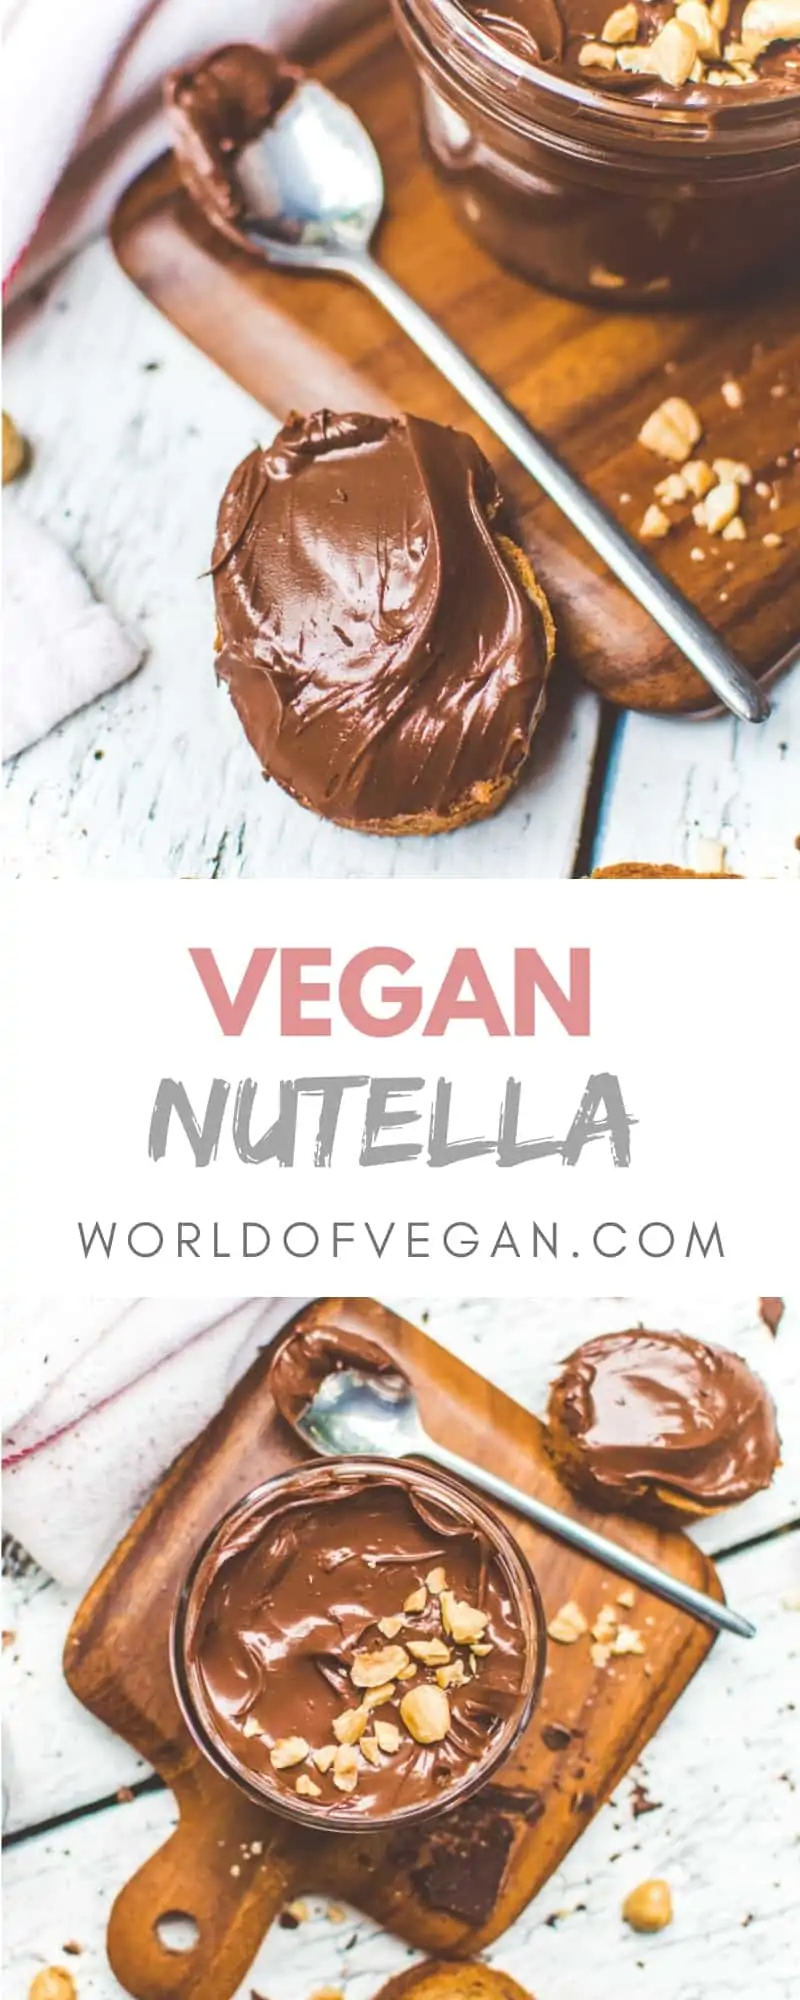 Homemade Vegan Nutella | Chocolate Spread | World of Vegan | #nutella #vegan #recipe #homemade #diy #chocolate #hazelnuts #worldofvegan